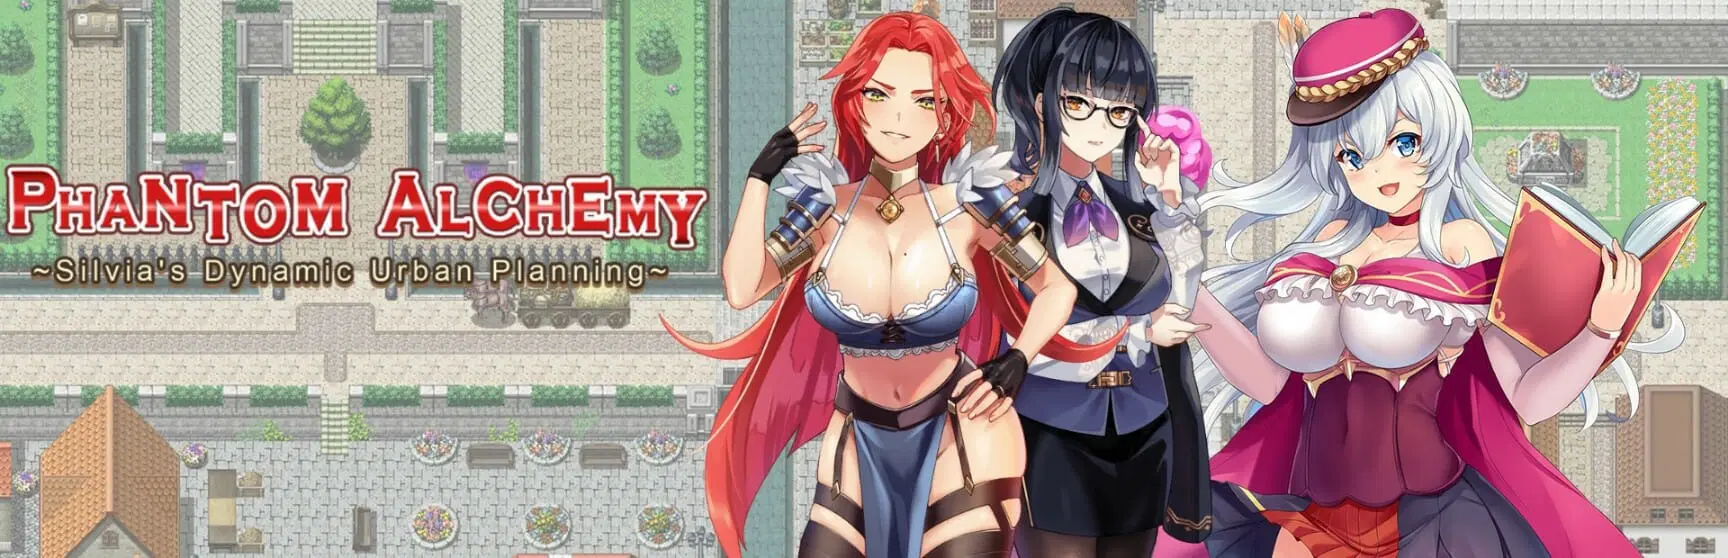 Phantom Alchemy Apk Adult Hentai Game Download 10